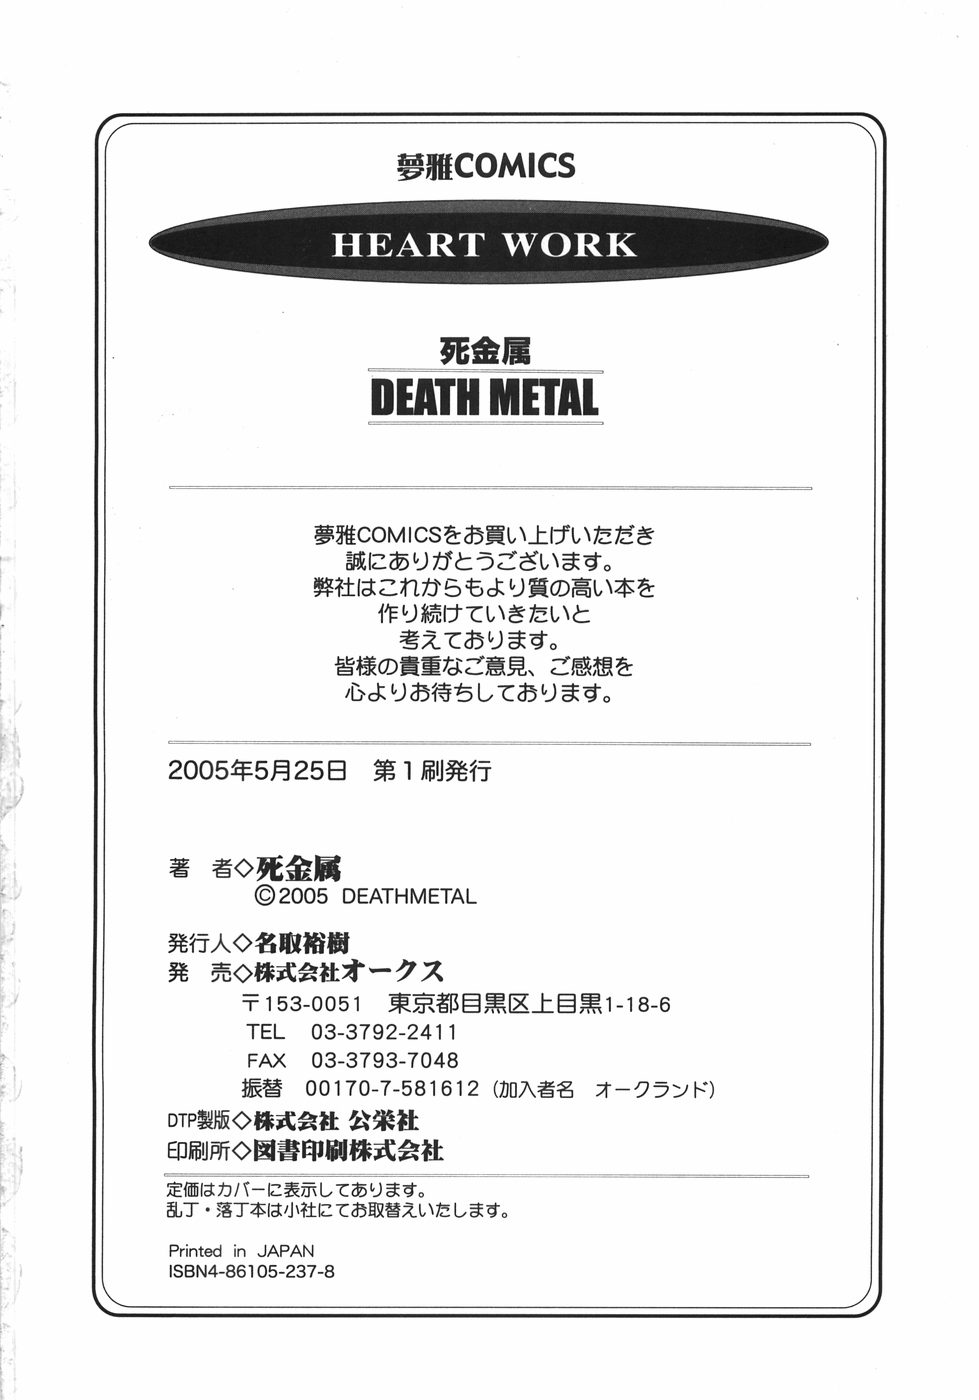 [死金属] HEART WORK